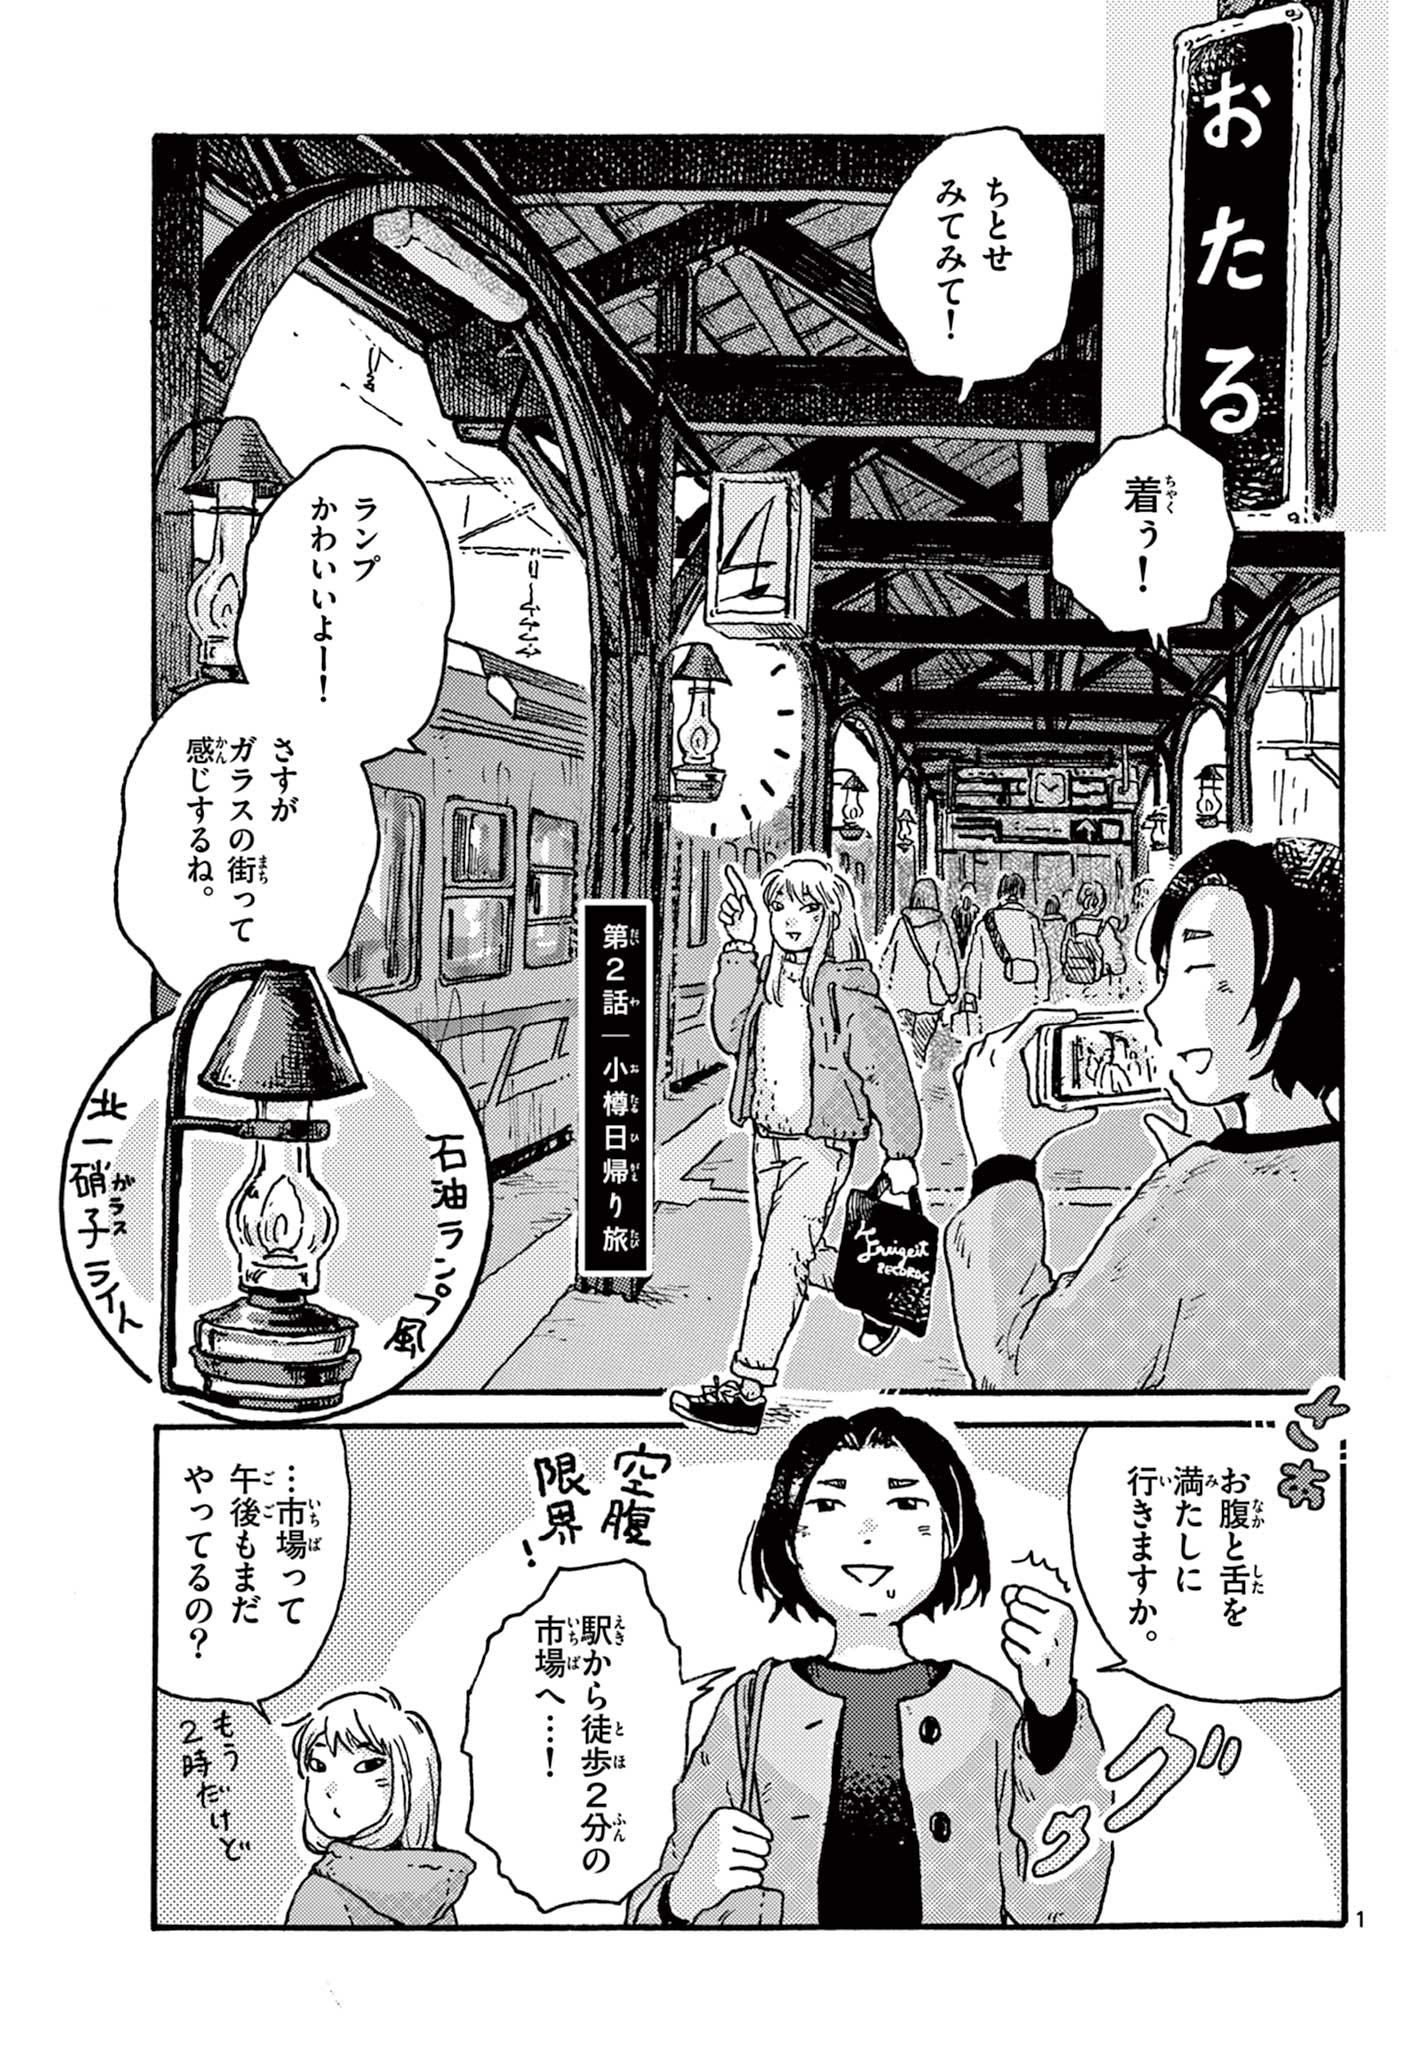 Kitaguni Yurayura Kikou - Chapter 2 - Page 1